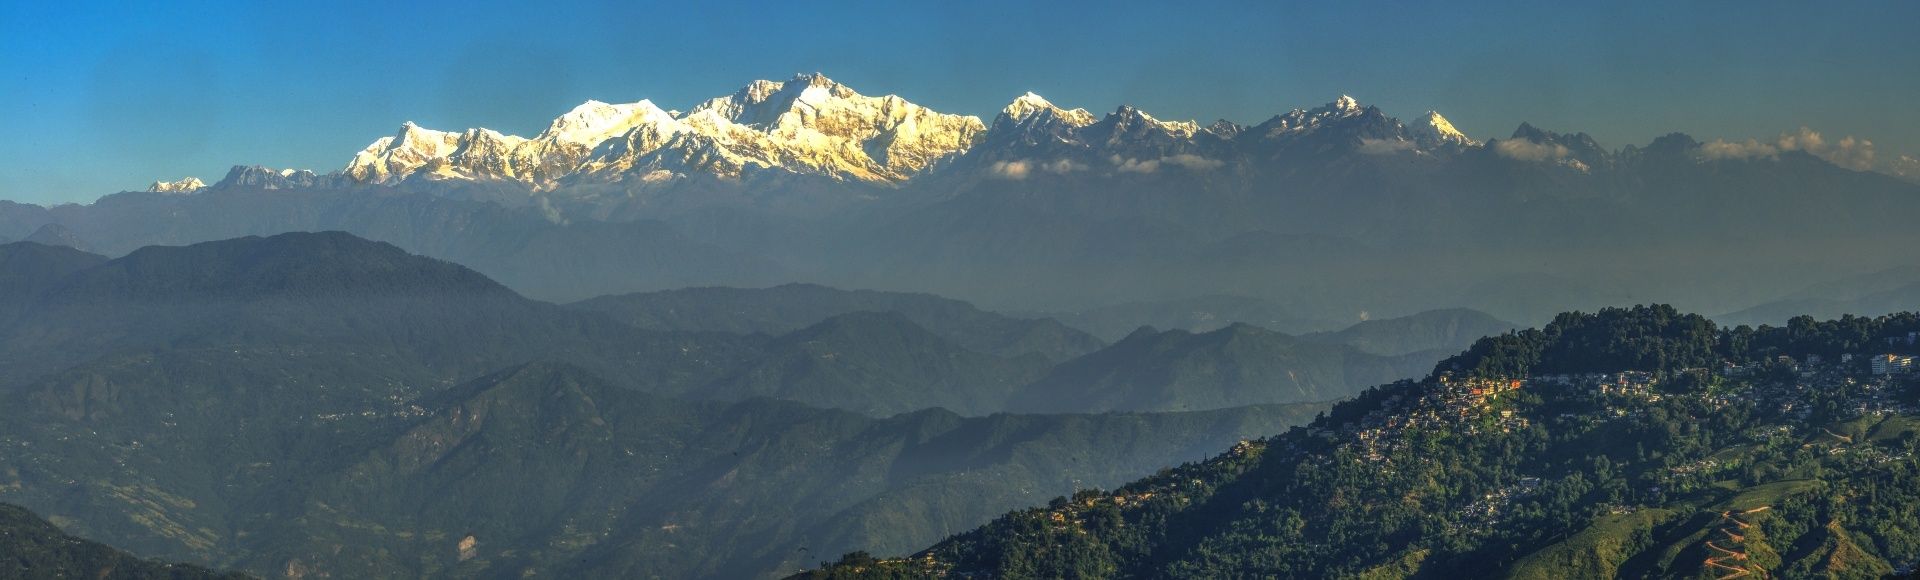 Panorma einer indischen Berglandschaft, in der Tee angebaut wird.